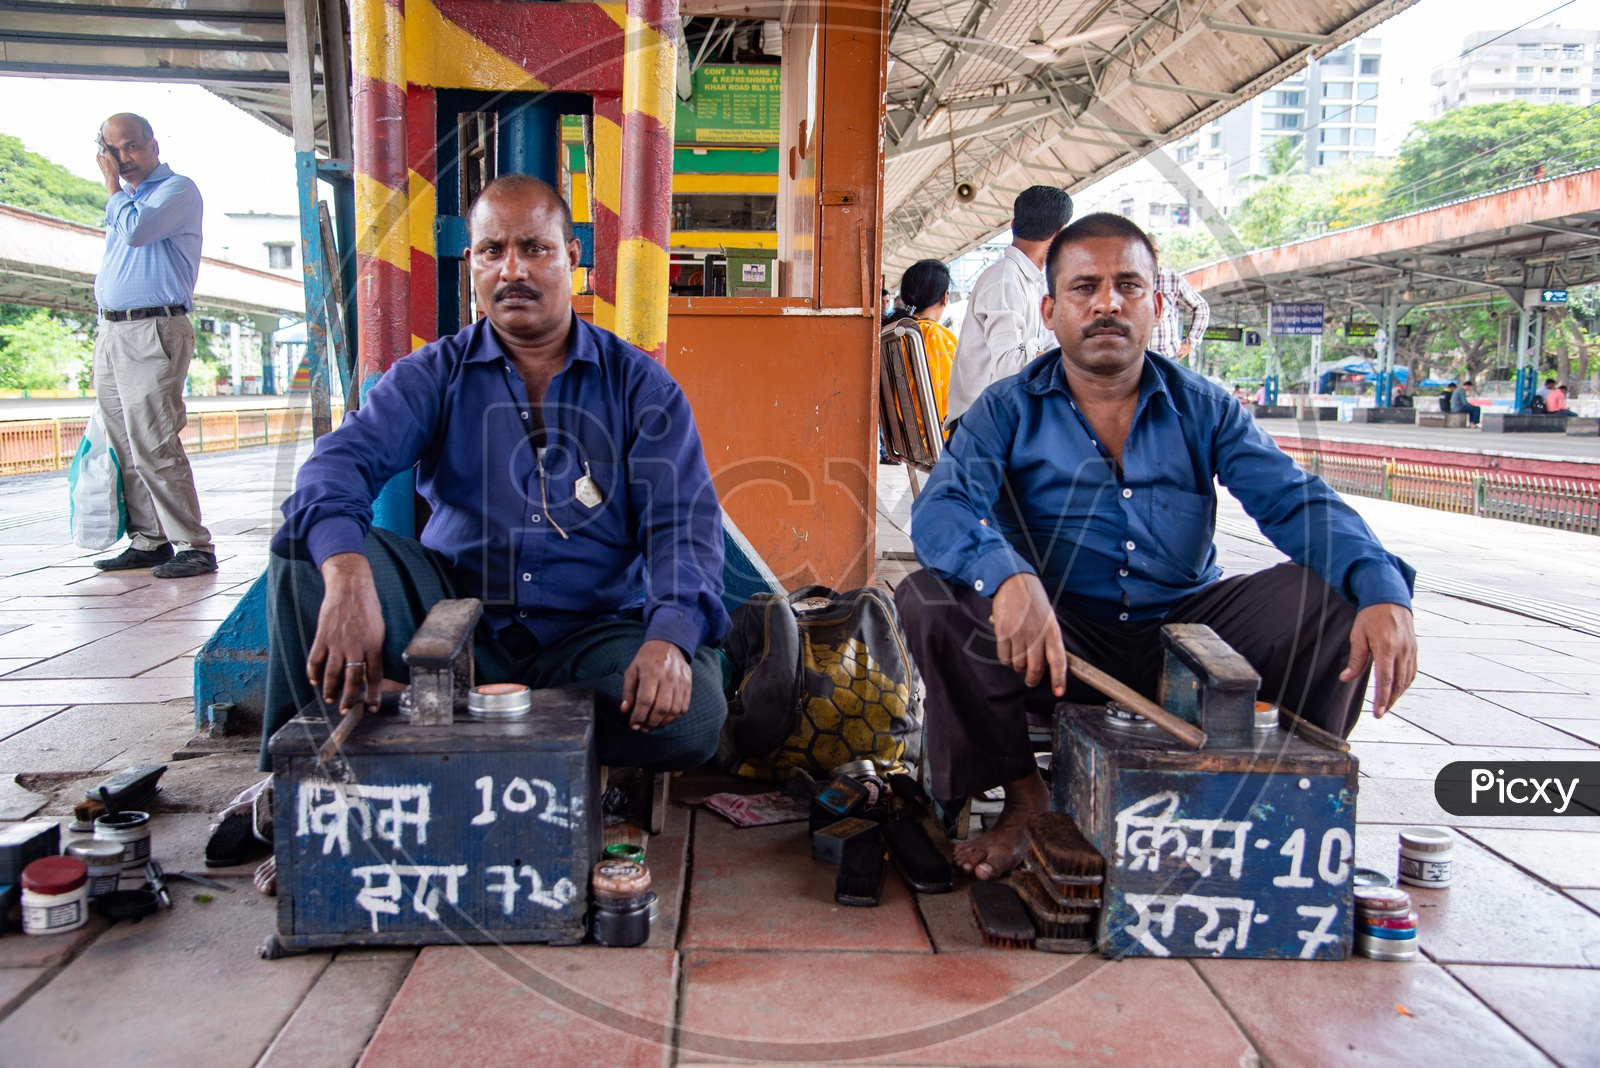 Shoe polishers / Cobblers at a subarban railway station in Mumbai